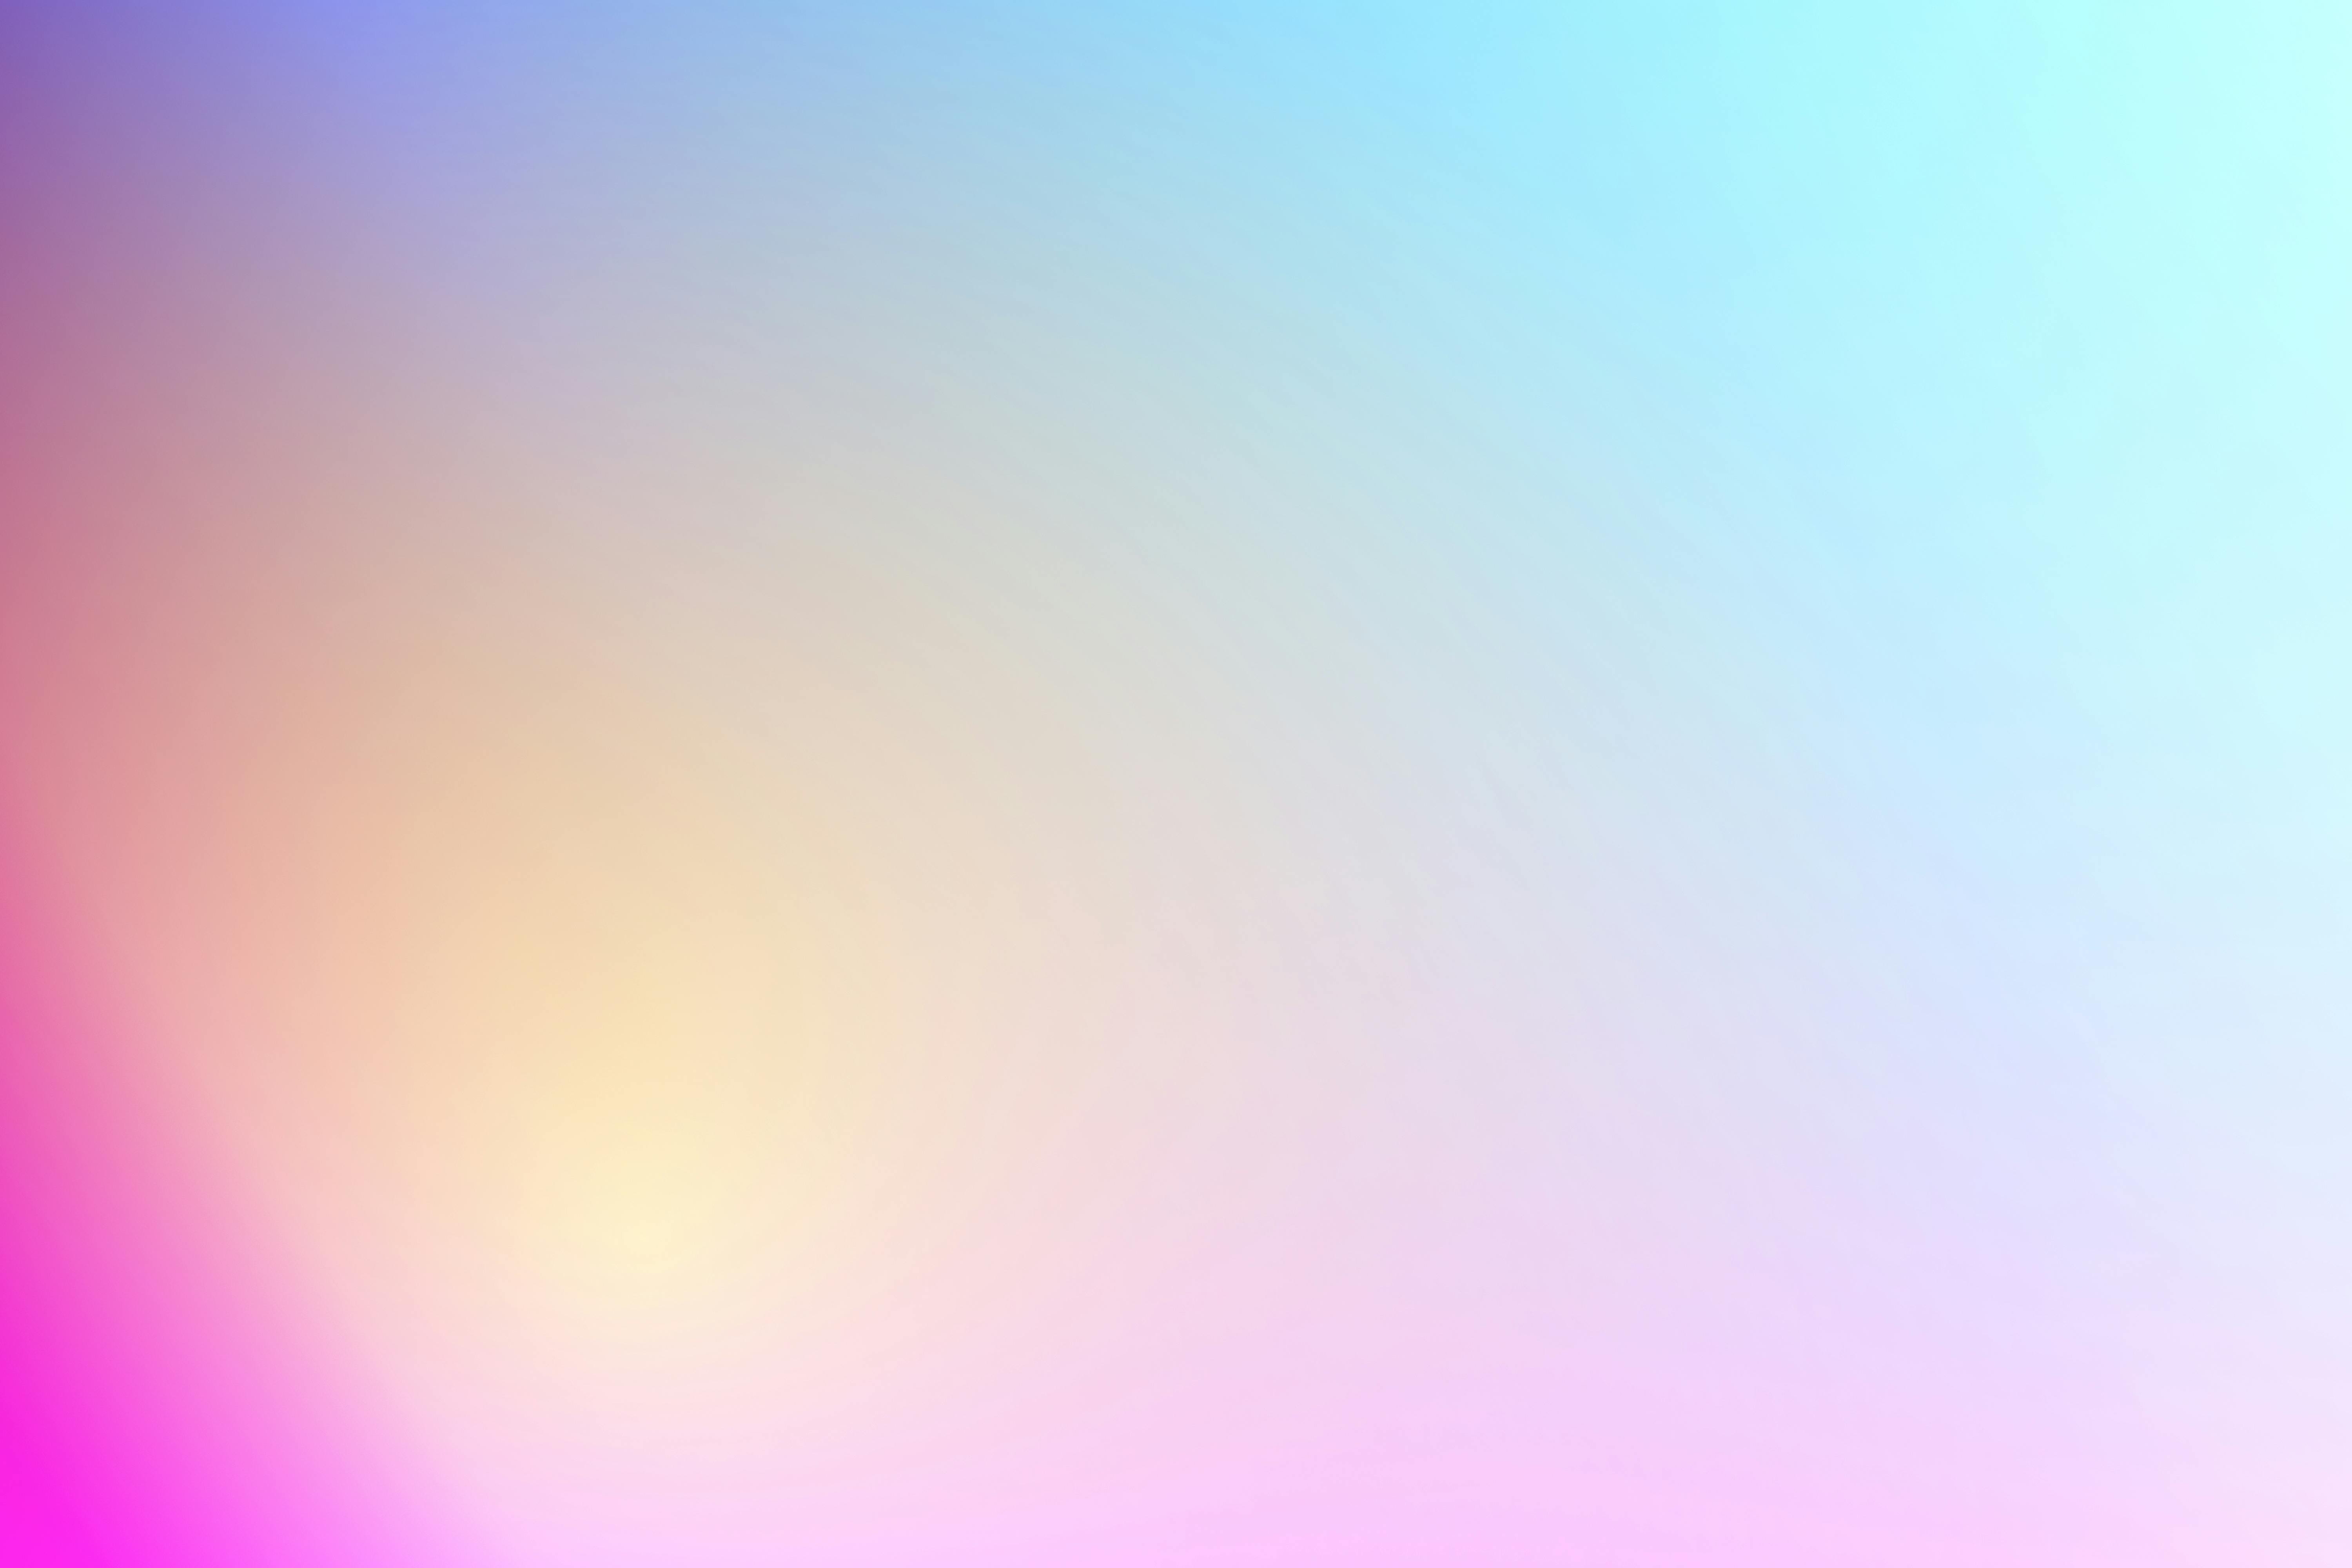 A Pastel Color Gradient · Free Stock Photo